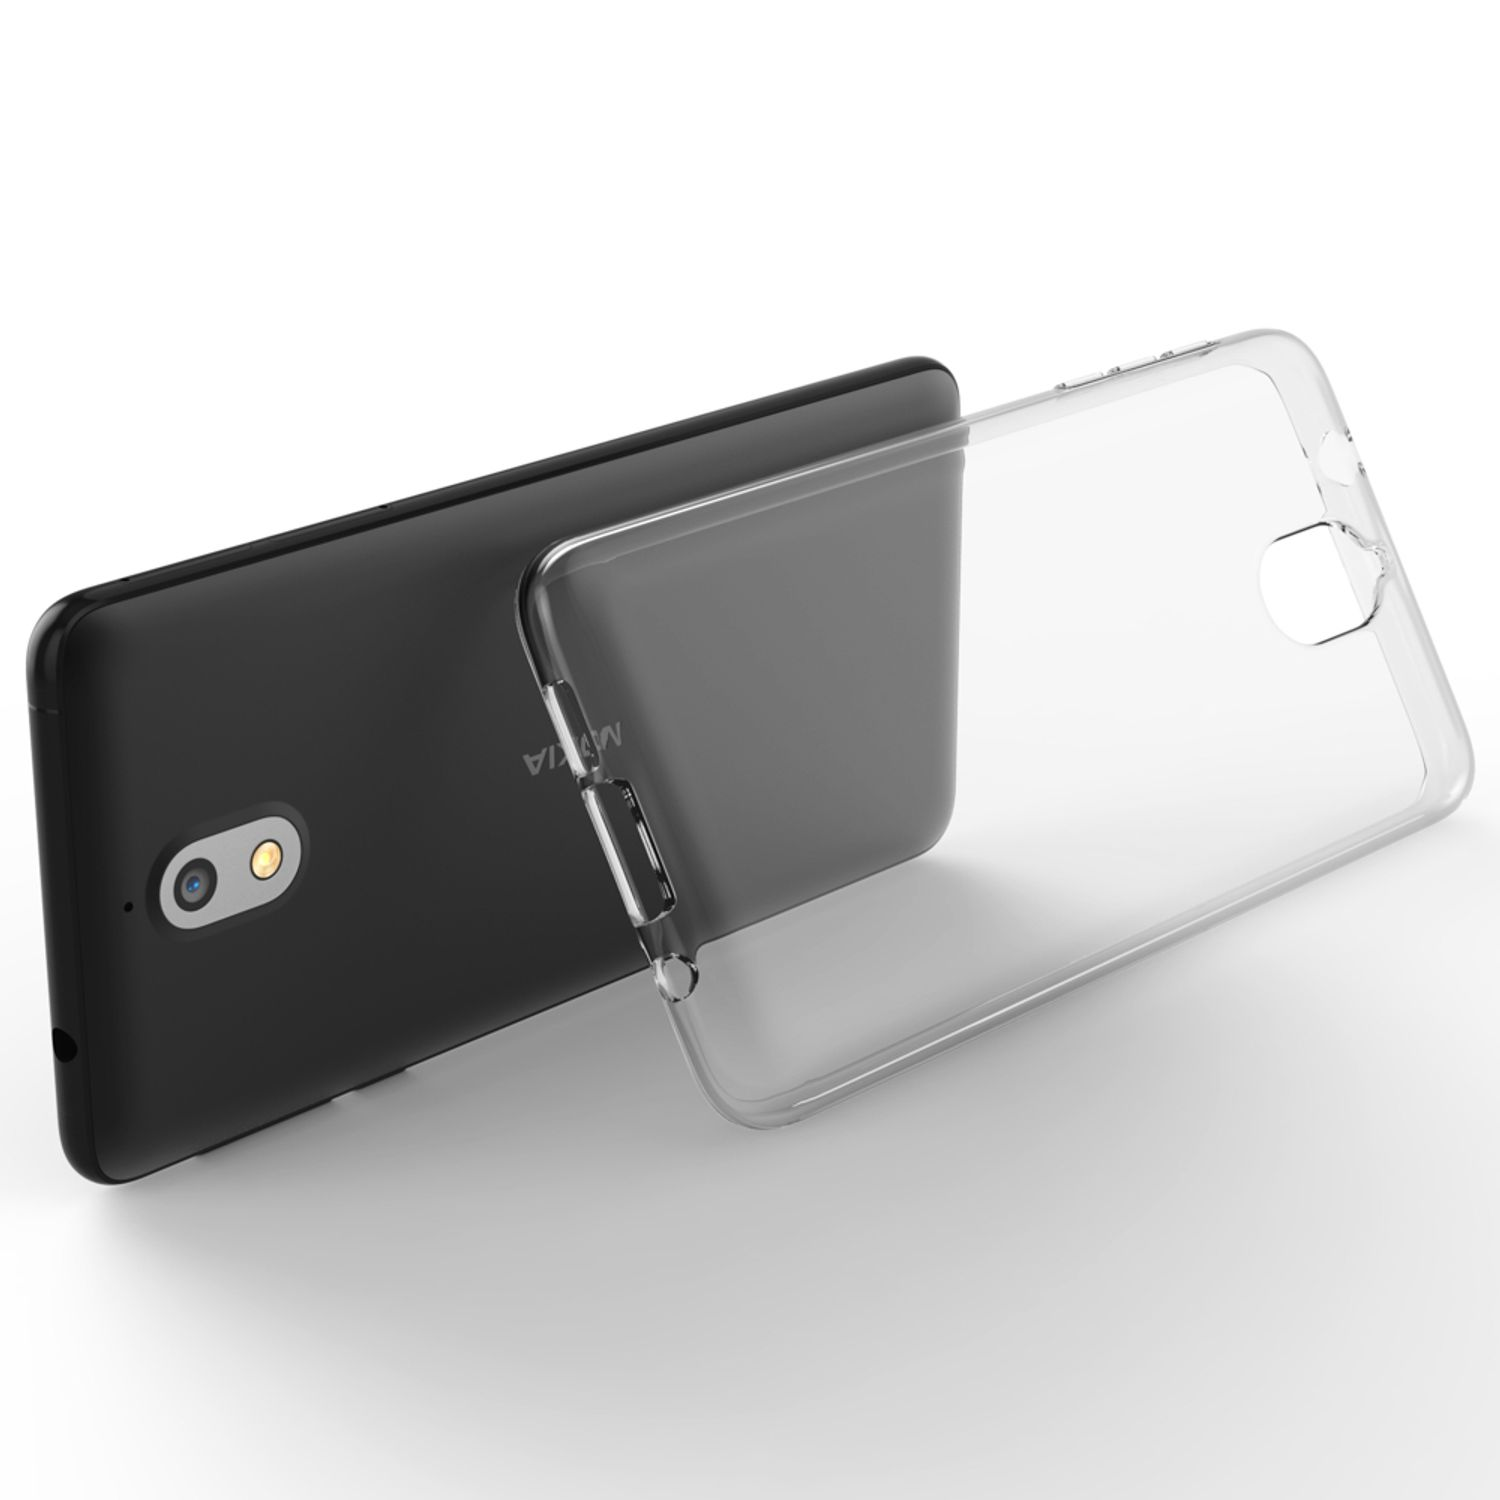 Hülle, Nokia, (2018), Silikon NALIA Backcover, Klar Transparente Transparent 3.1